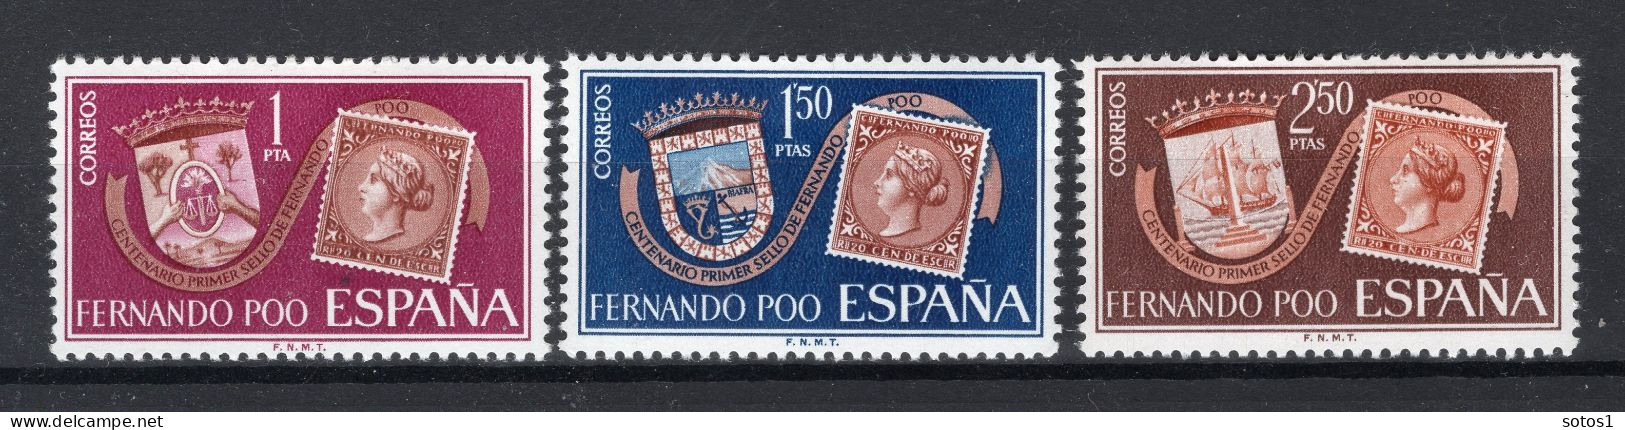 FERNANDO POO Yt. 254/256 MNH 1968 - Fernando Poo